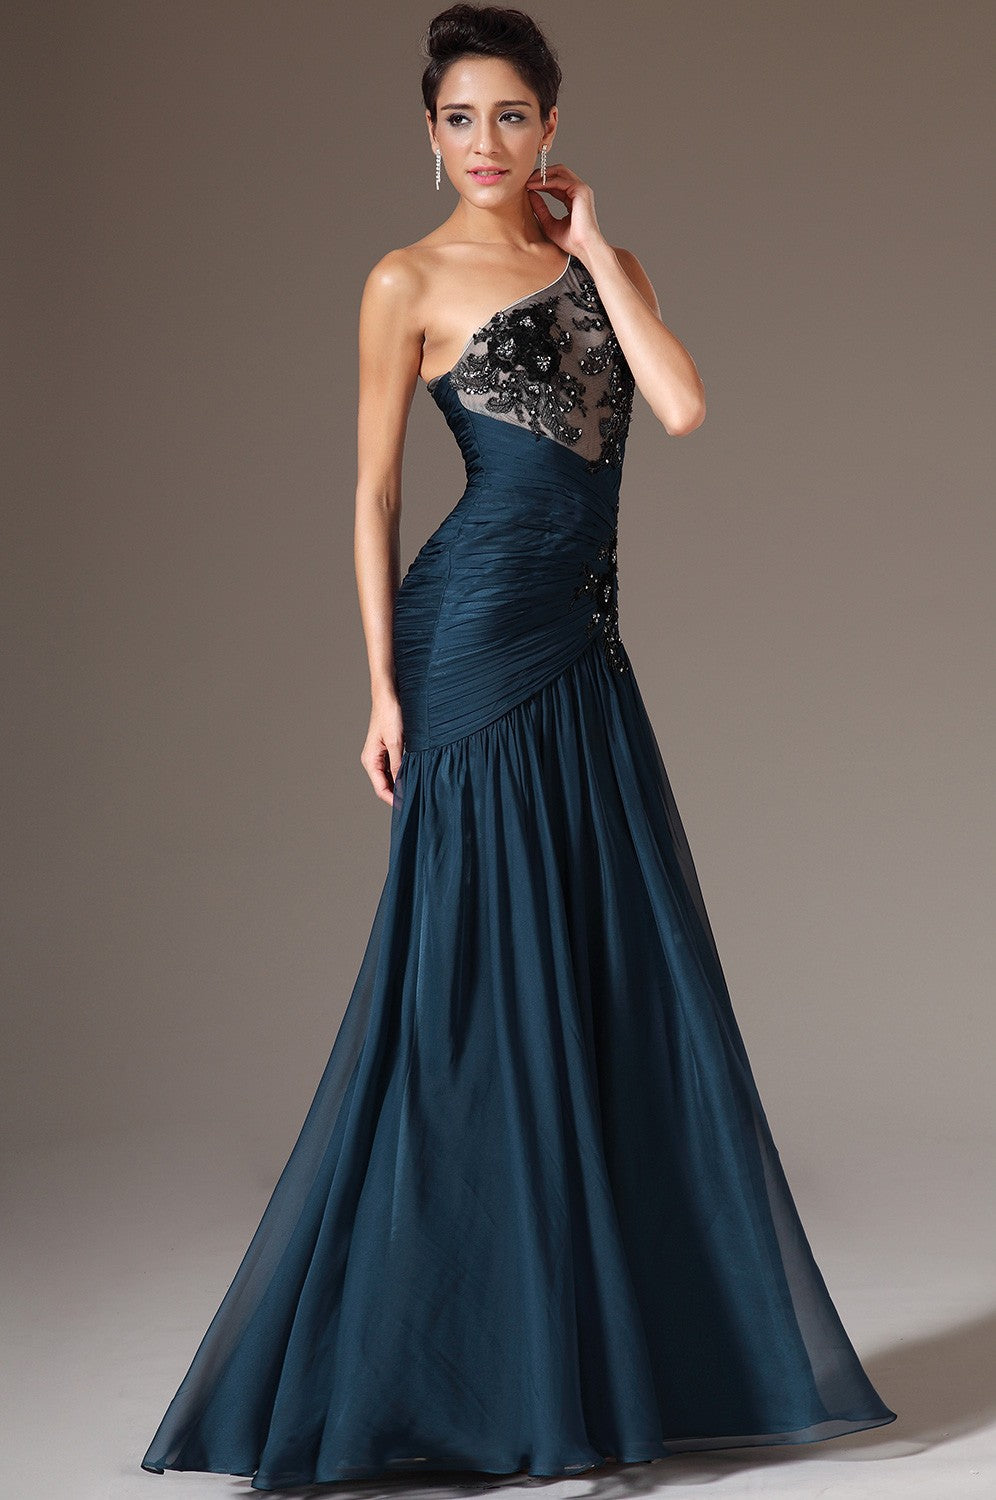 Dark Blue Chiffon One Shoulder Long Formal Evening Gown